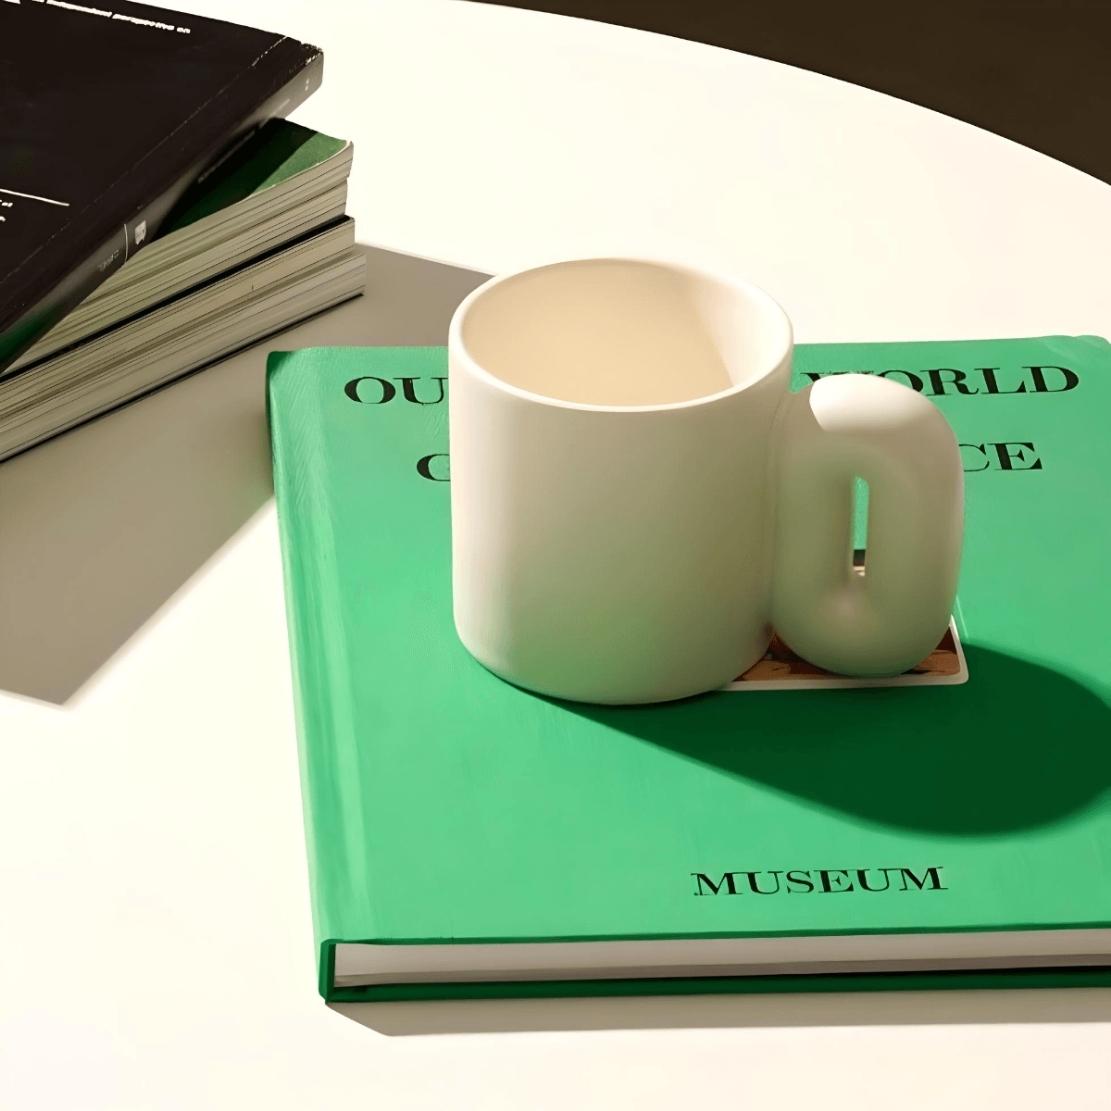 White, ceramic oval shaped handle mug on a green book